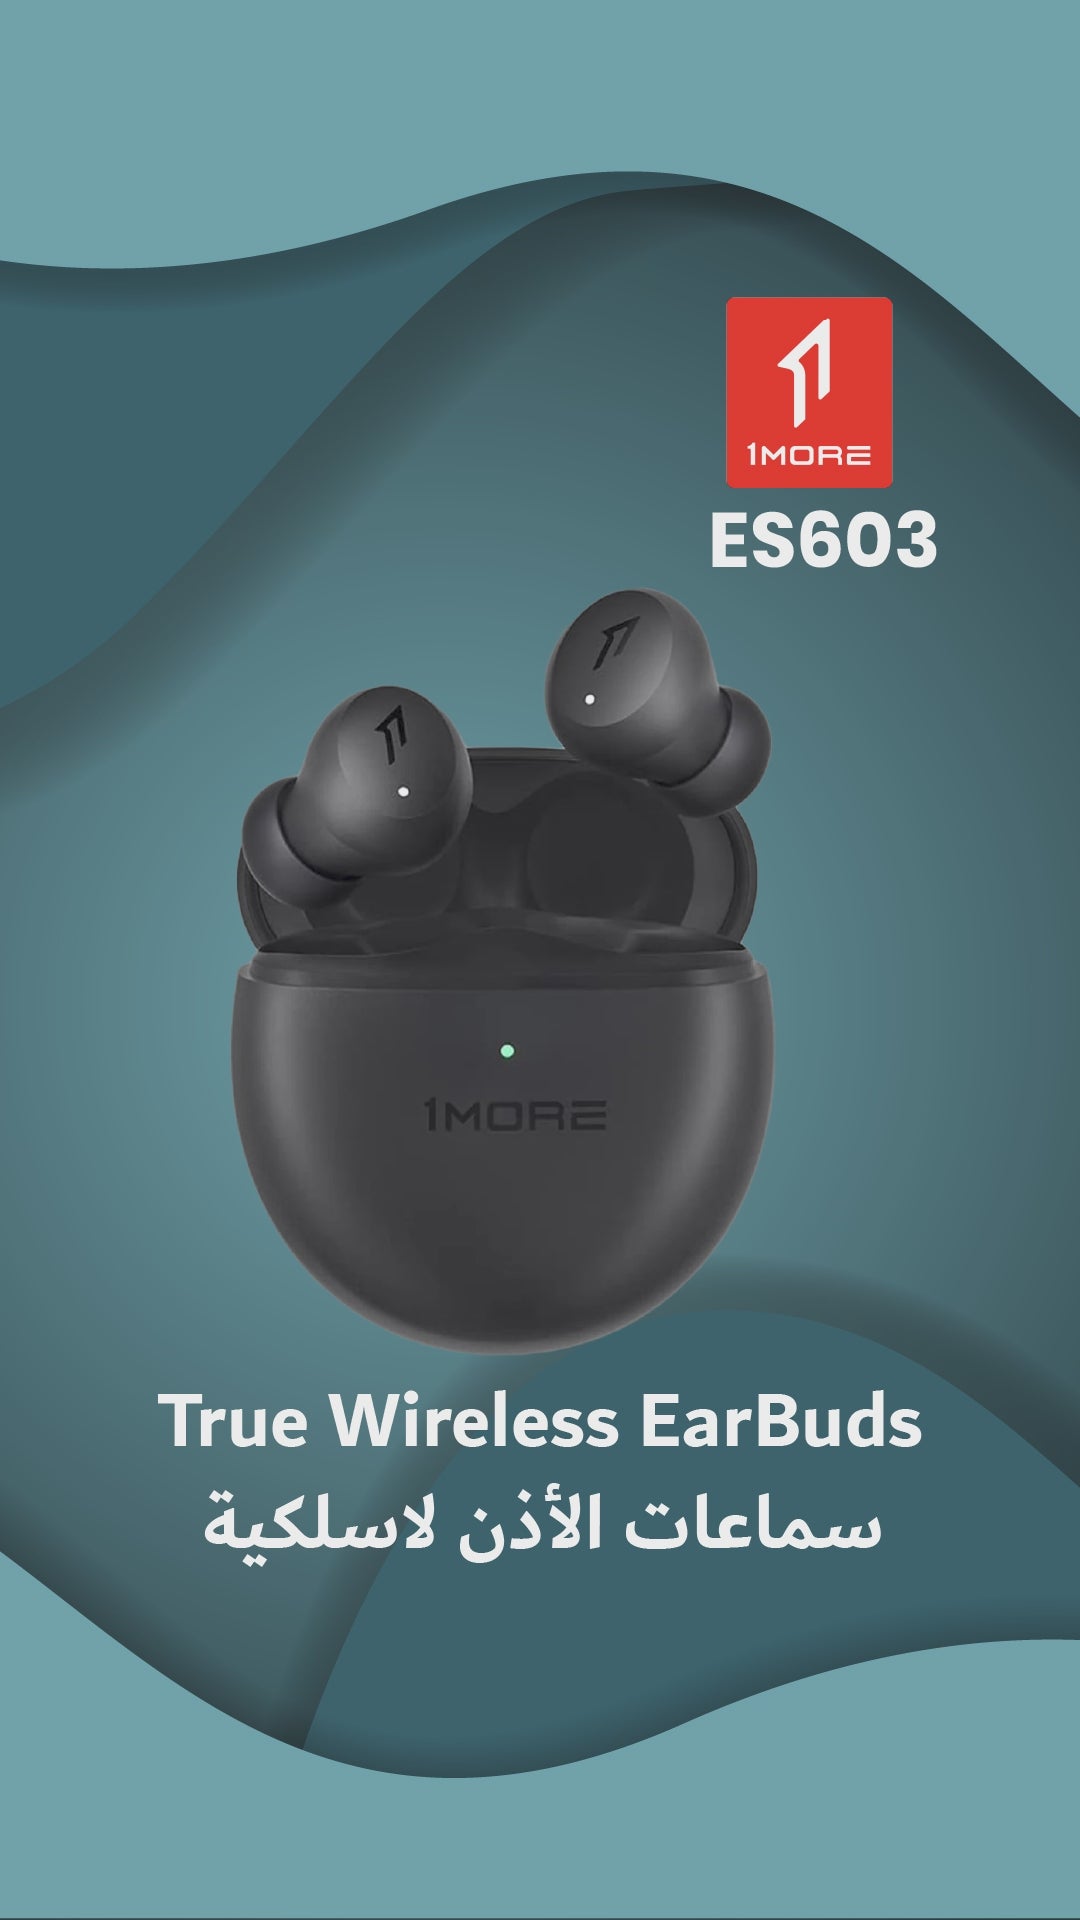 1MORE ES603 ComfoBuds Mini Hybrid True Wireless Earbuds - Black